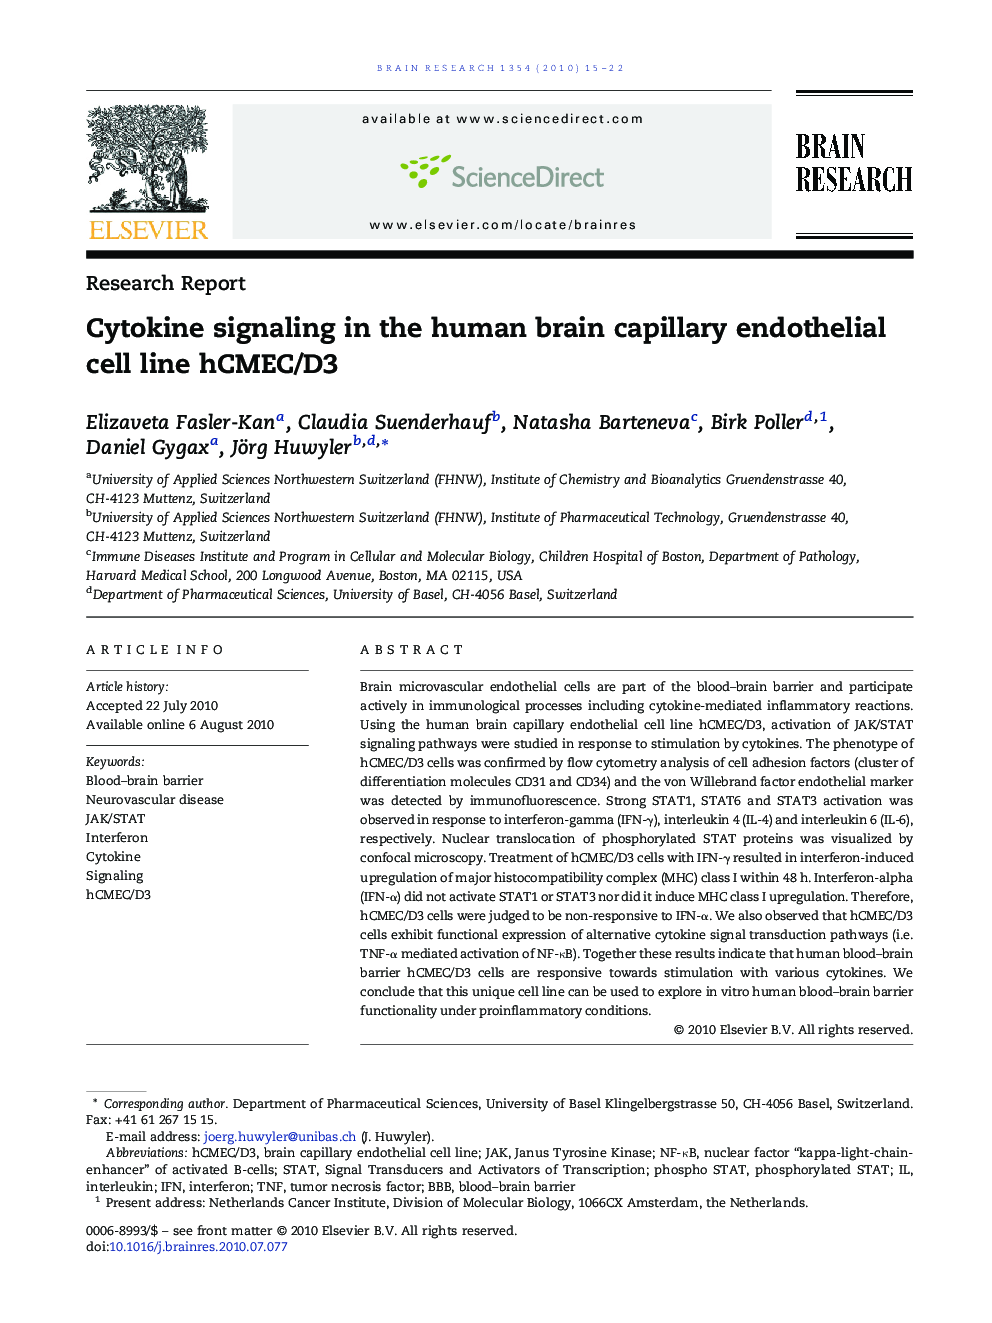 Cytokine signaling in the human brain capillary endothelial cell line hCMEC/D3